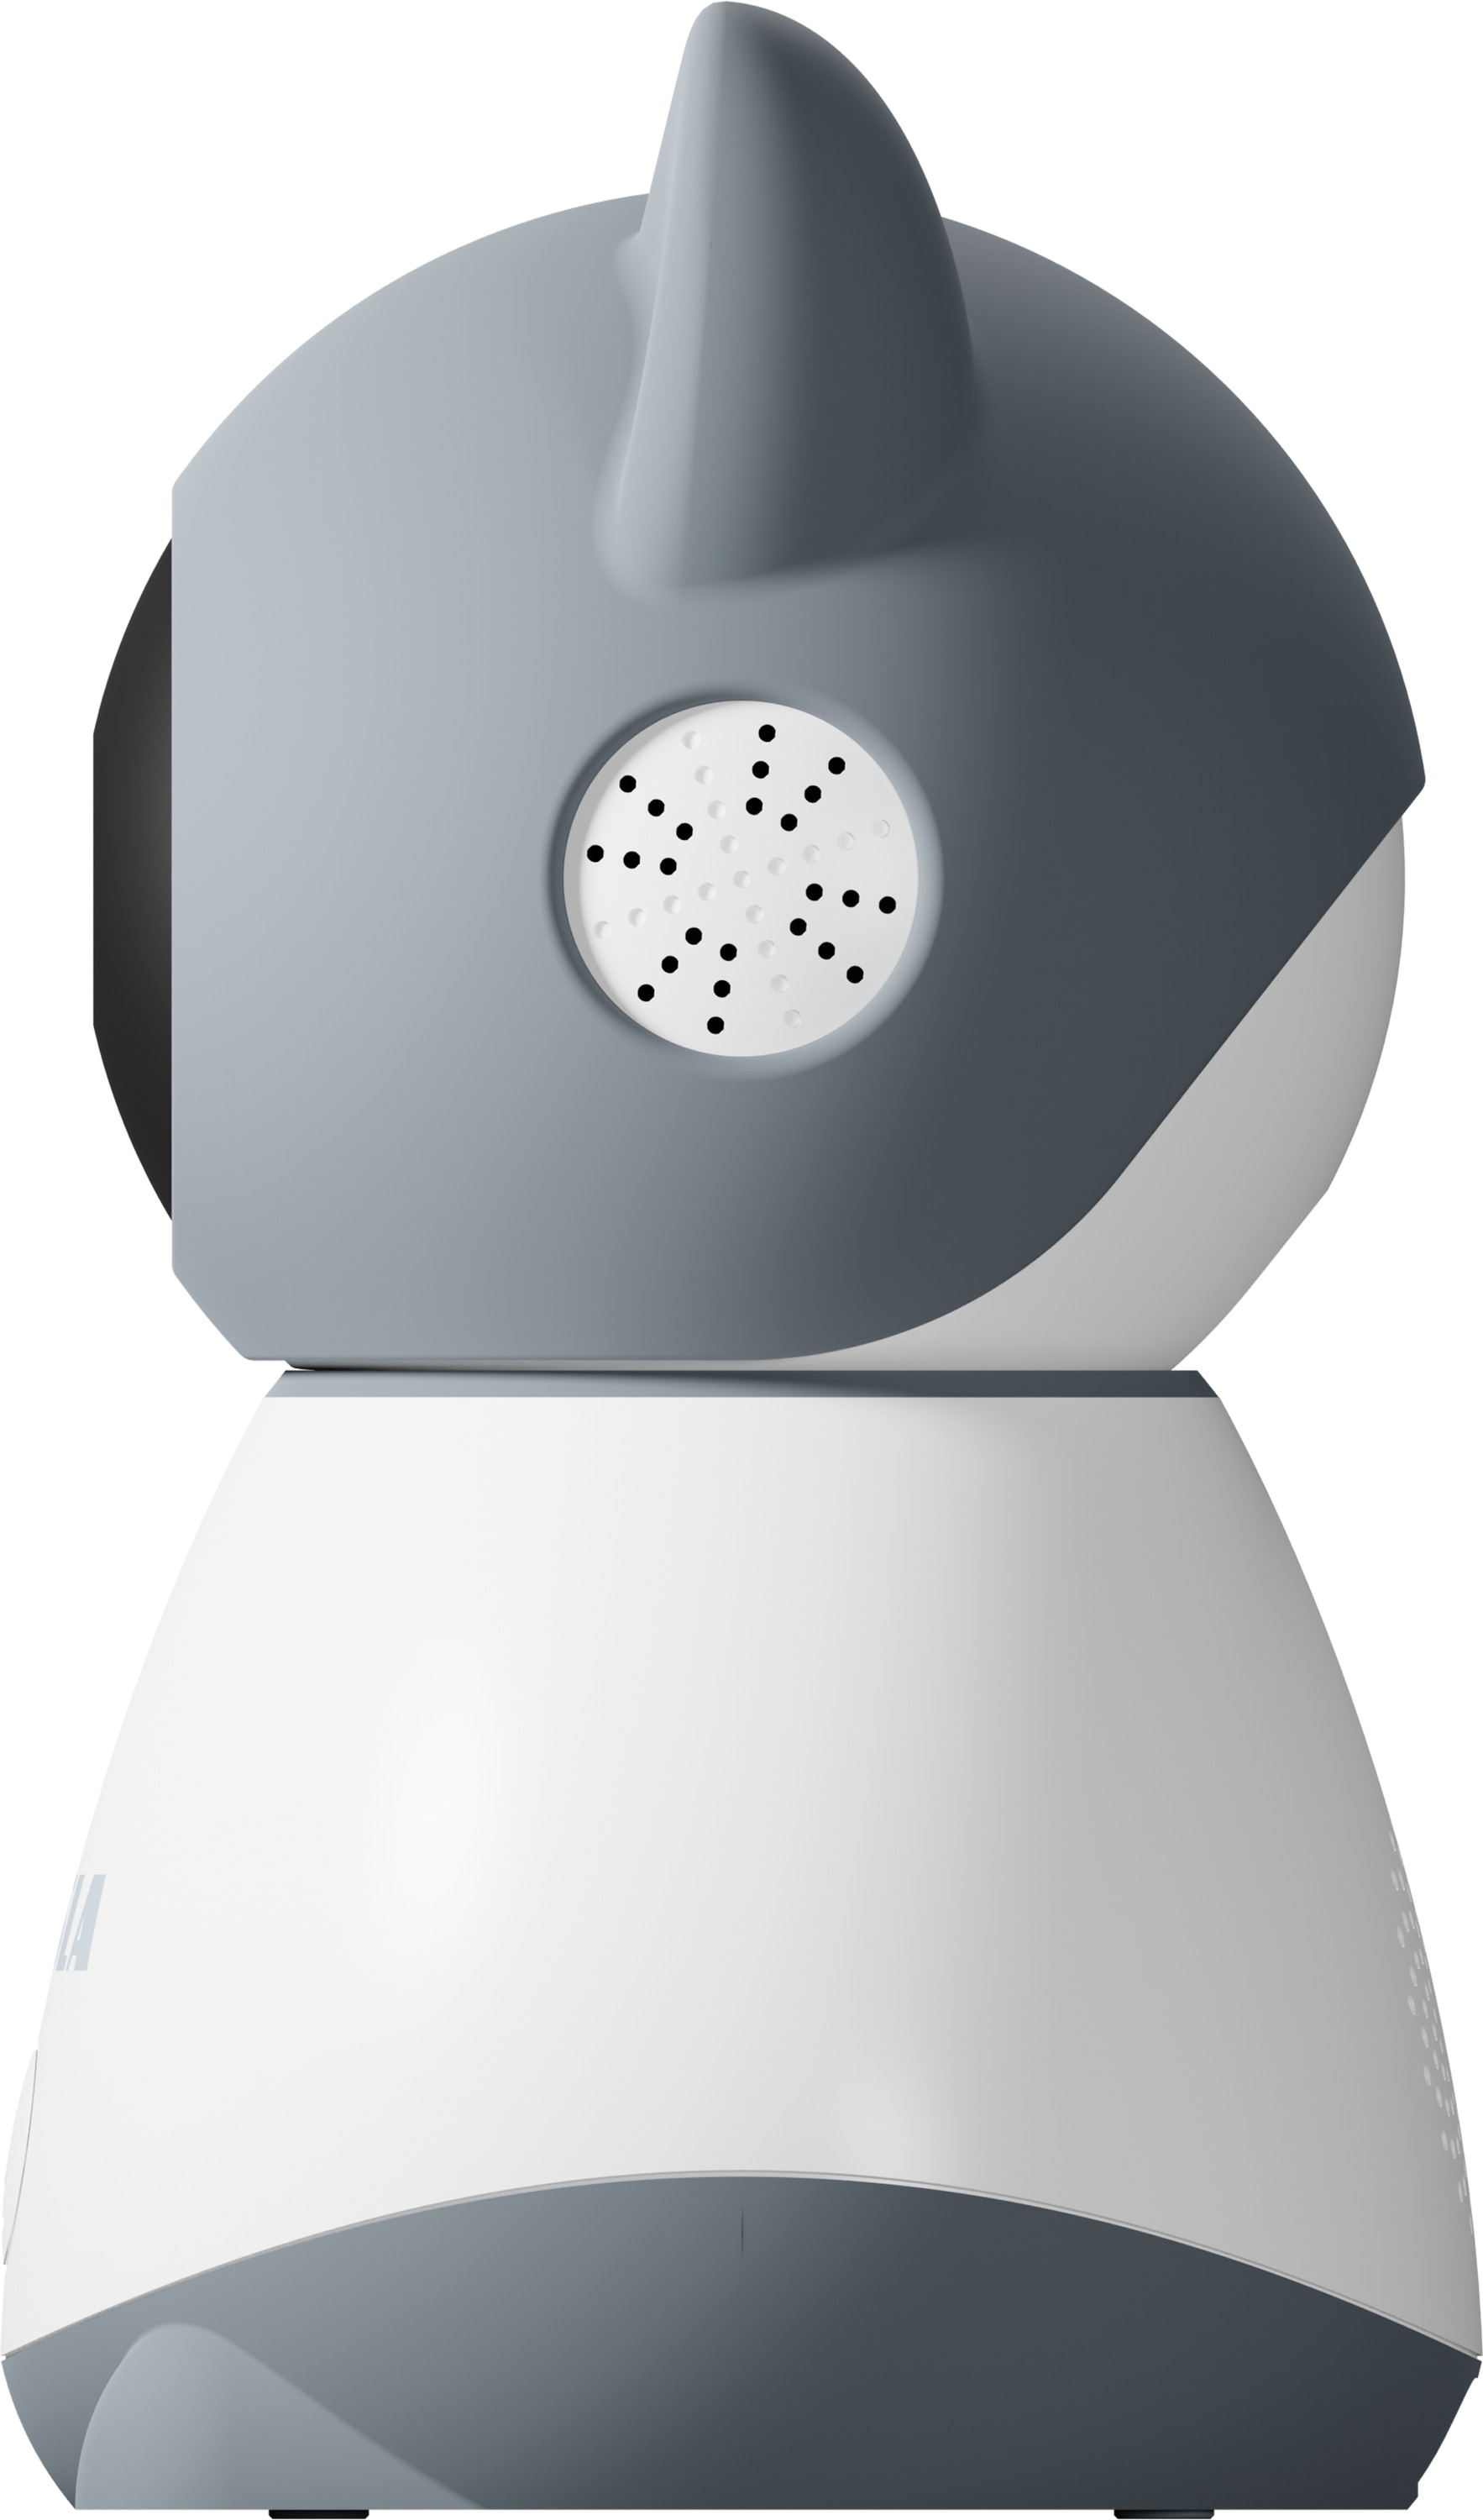 TESLA Überwachungskamera Smart B250, grau/weiß